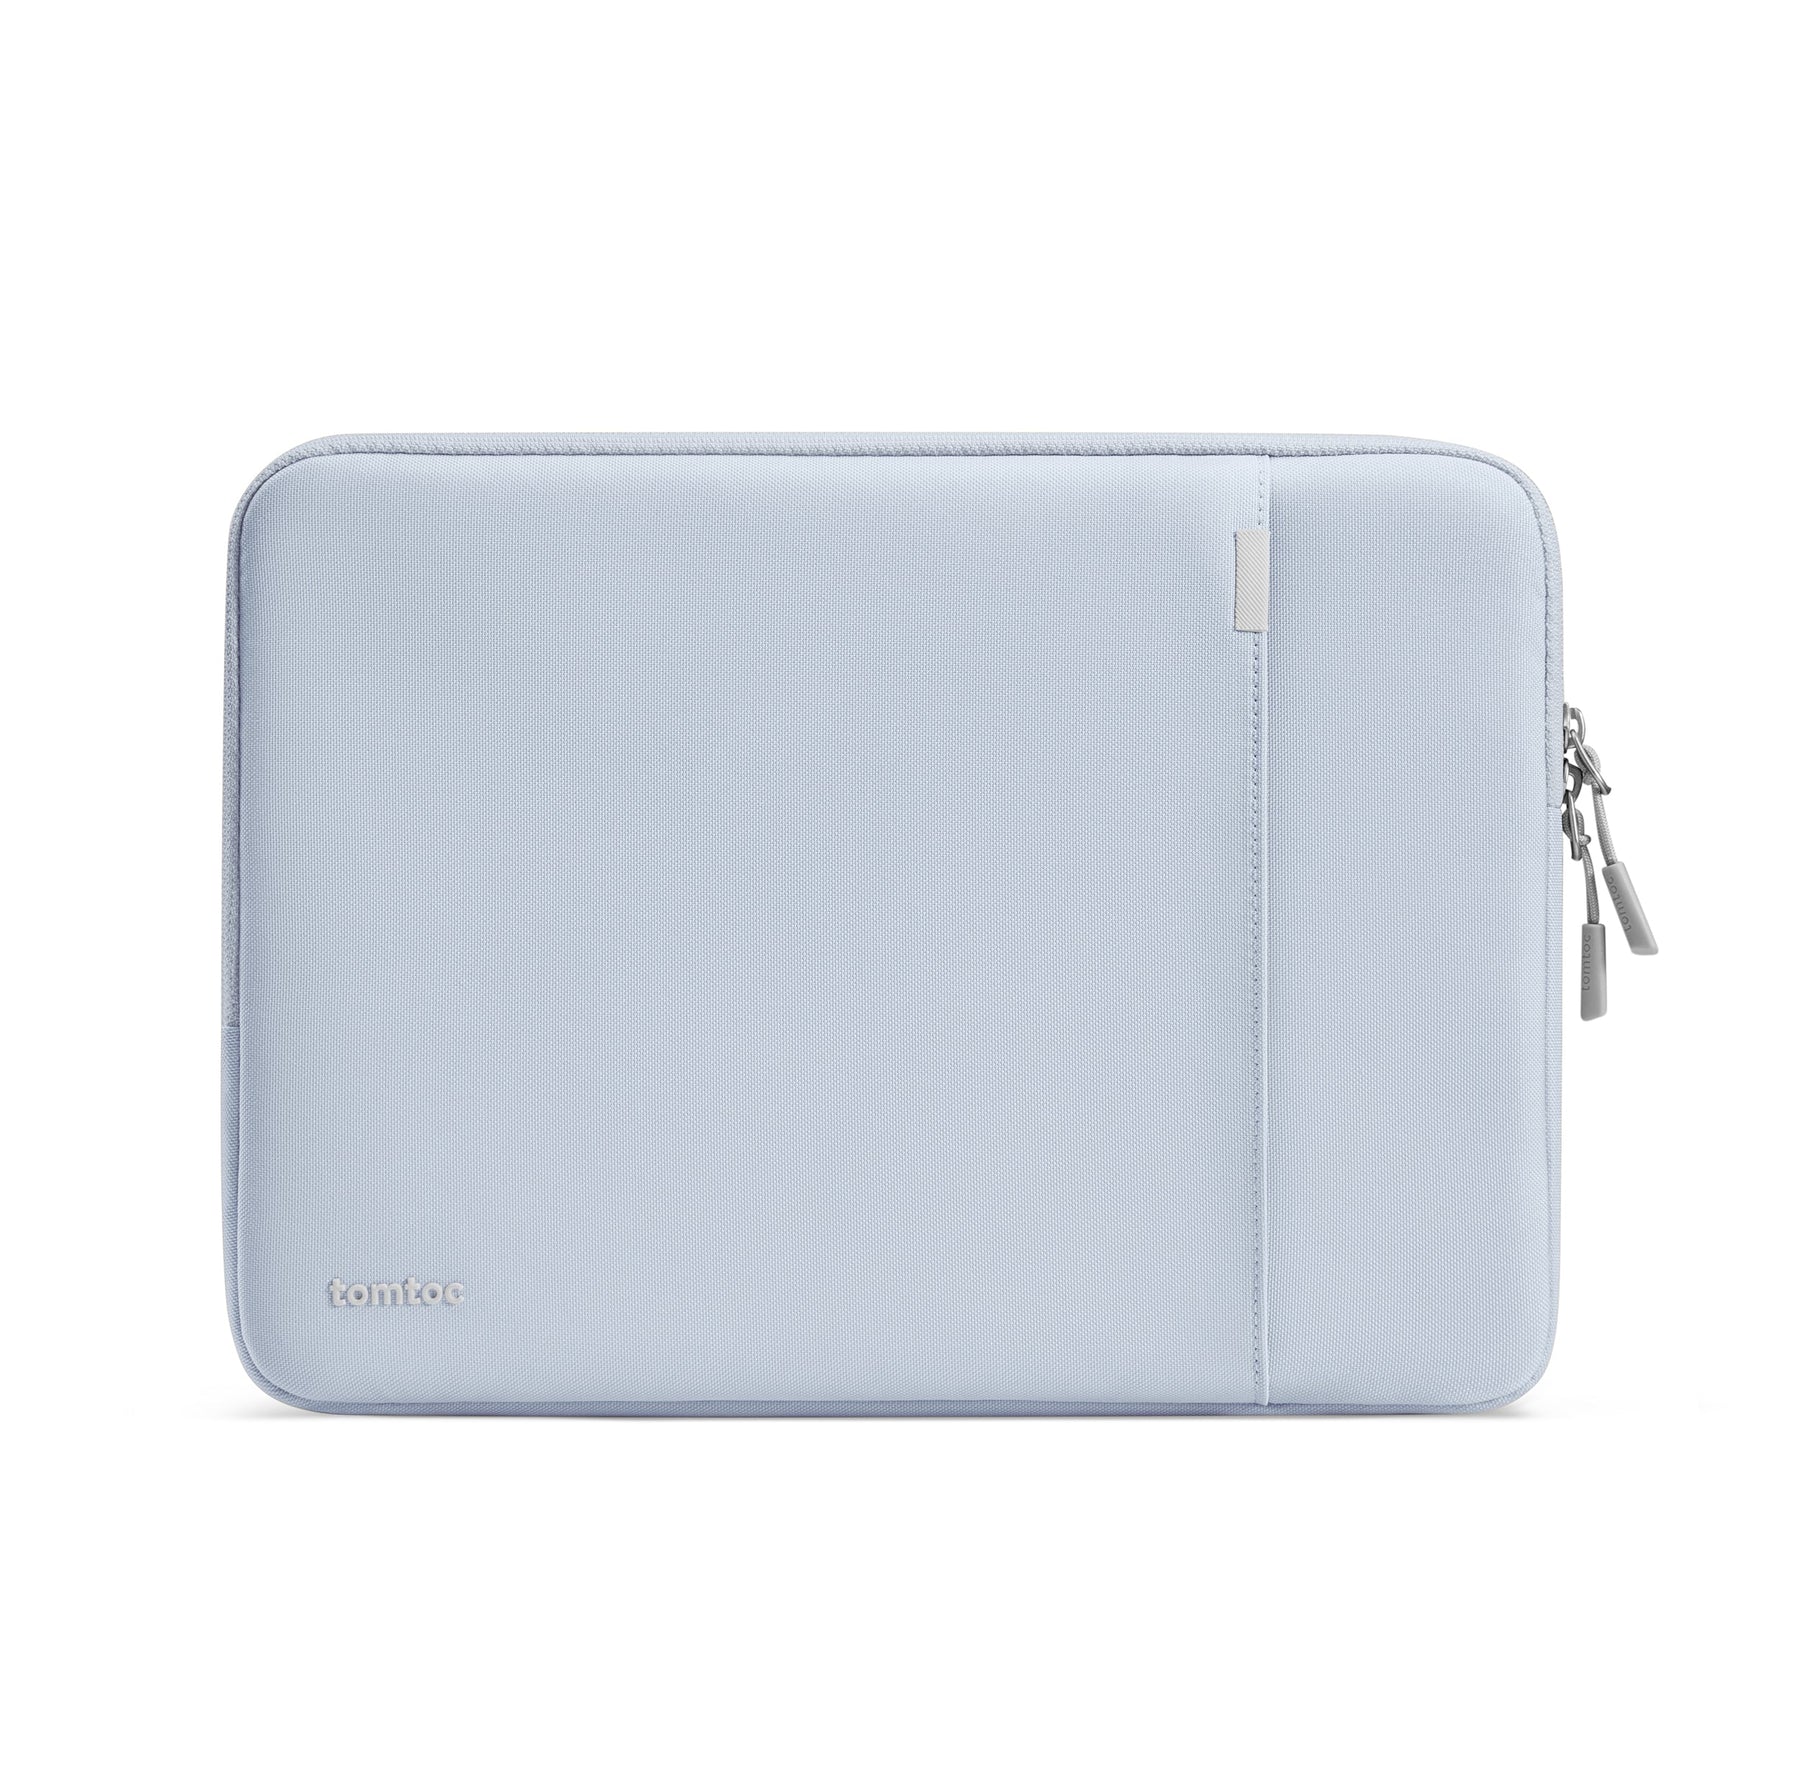 tomtoc 13 Inch Versatile 360 Protective Laptop Sleeve / MacBook Sleeve - Mist Blue